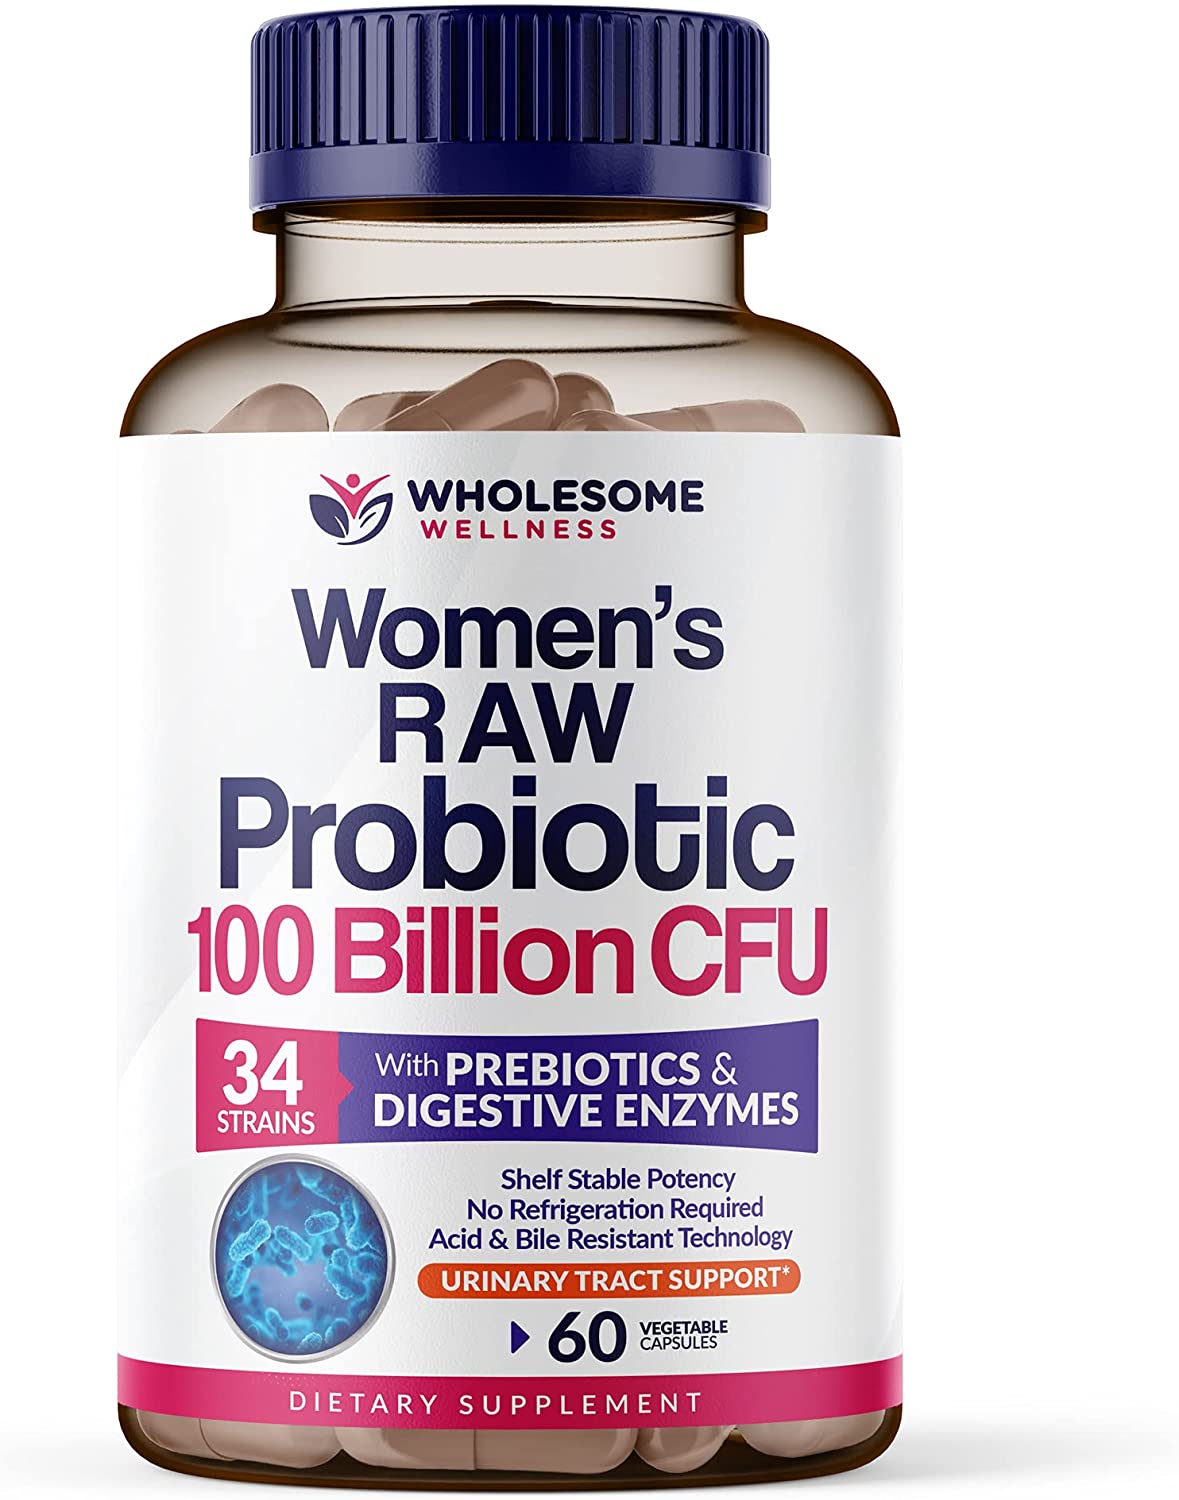 Wholesome Wellness 34-Strain Gummy Probiotics For Women, 60-Count